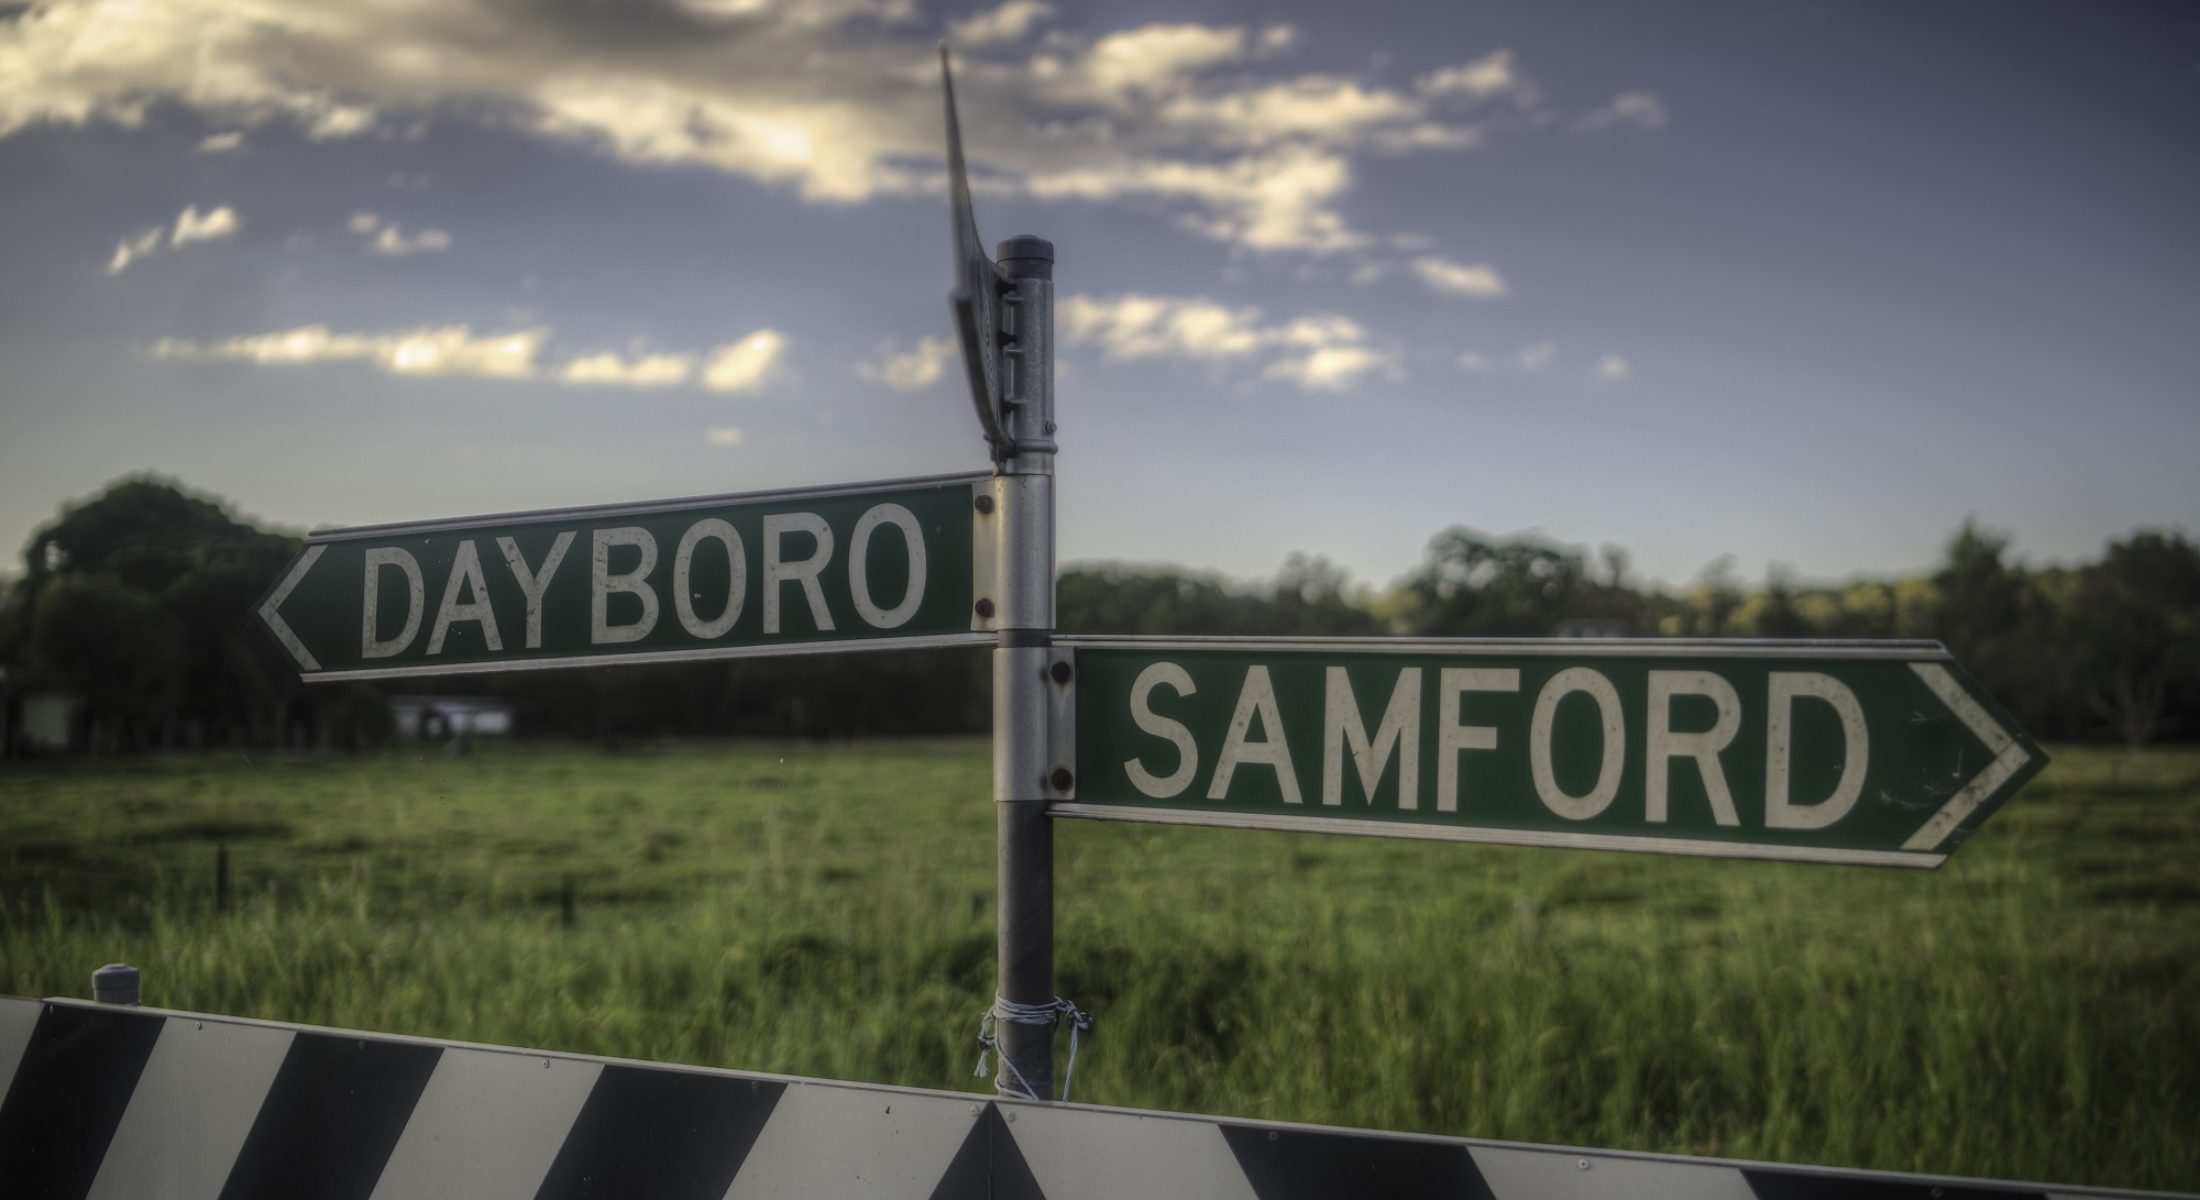 Dayboro Samford Moreton Bay